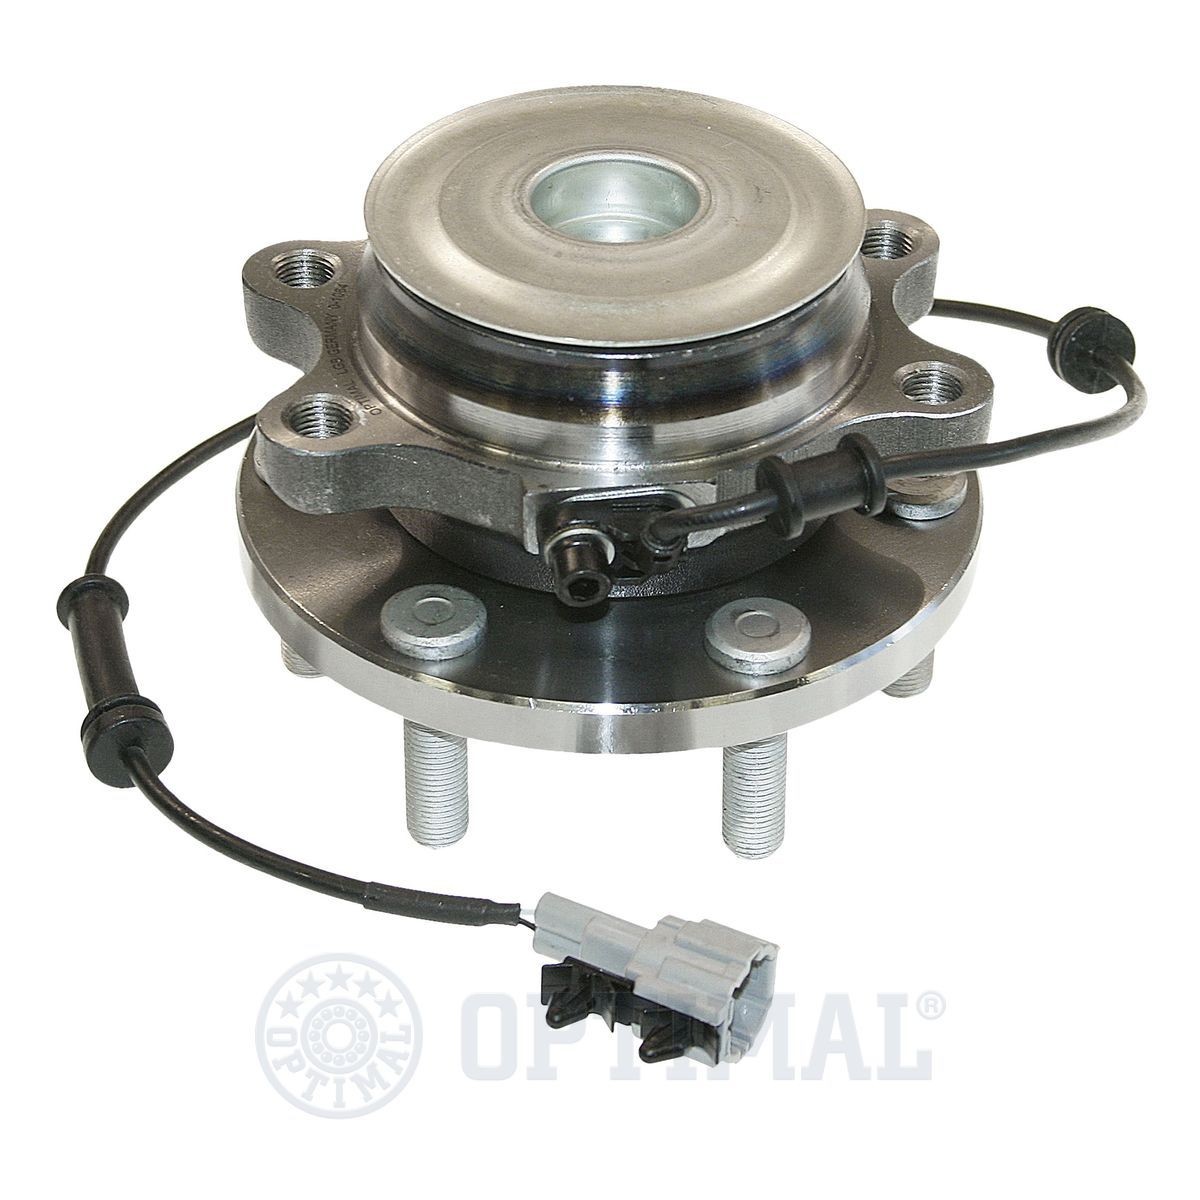 OPTIMAL 961521 Wheel bearing kit with integrated magnetic sensor ring